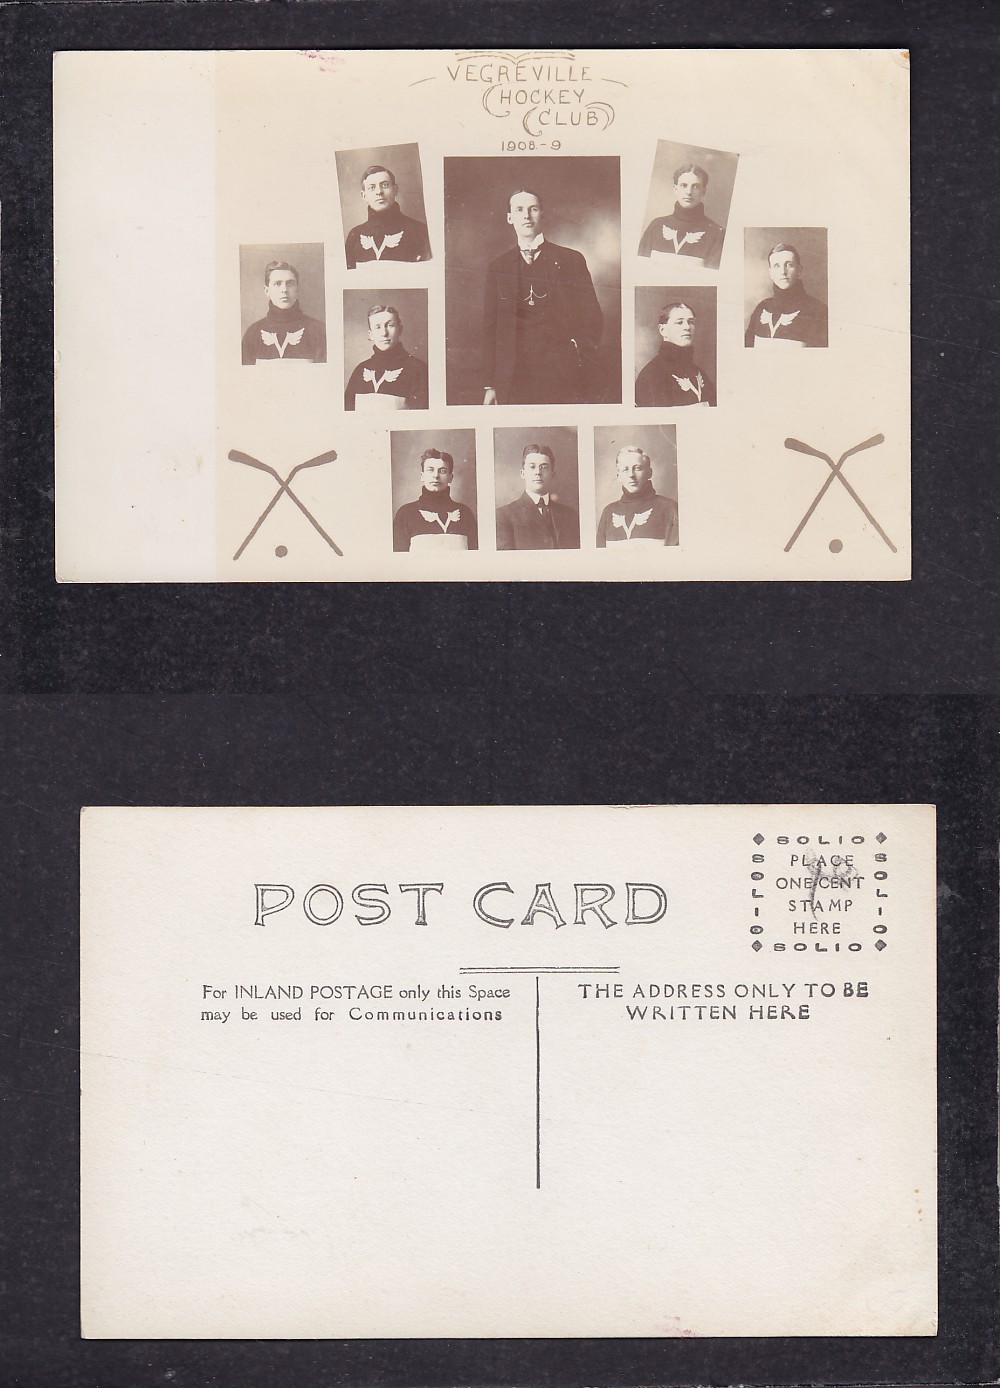 1908-09 VEGREVILLE HOCKEY TEAM POST CARD photo